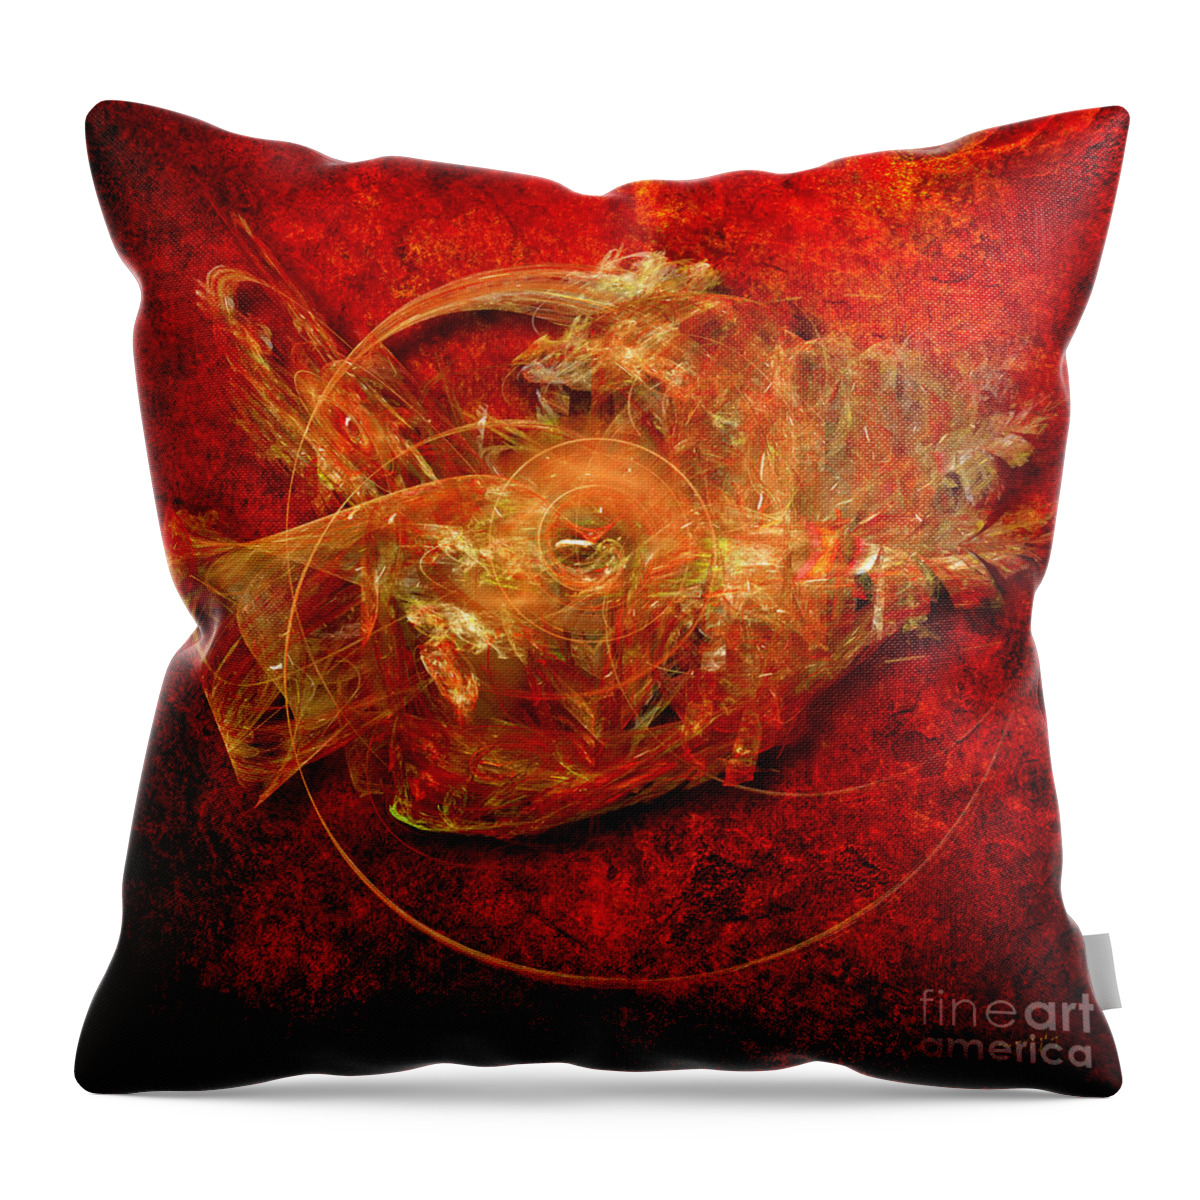 Red Throw Pillow featuring the digital art Abstractfantasy No. 1 by Alexa Szlavics